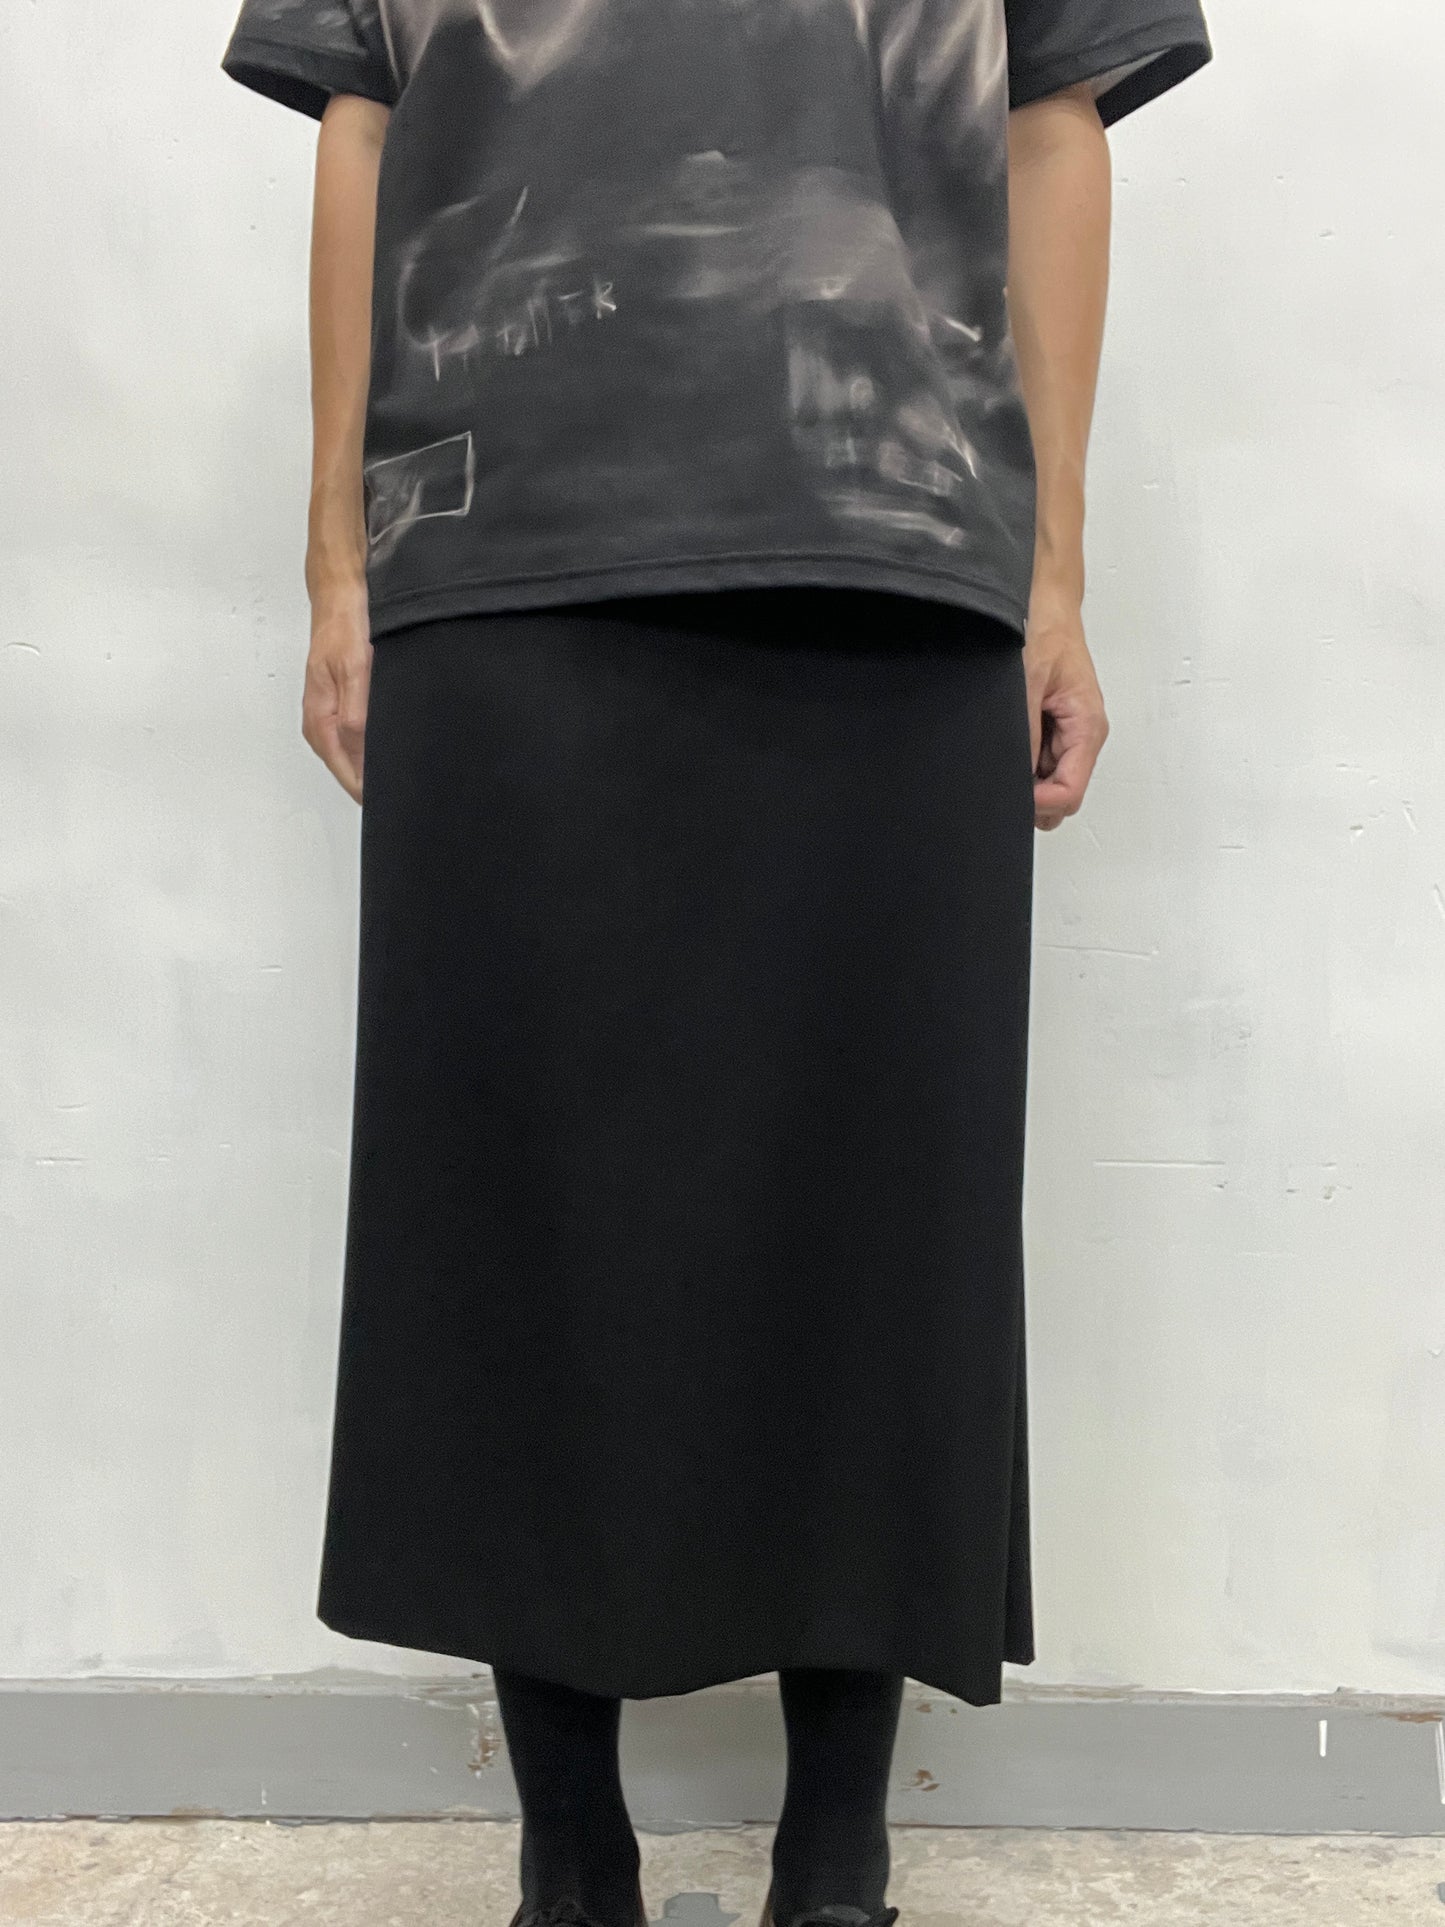 Ganryu Comme des Garcons SS2017 Skirt Trouser- Size M